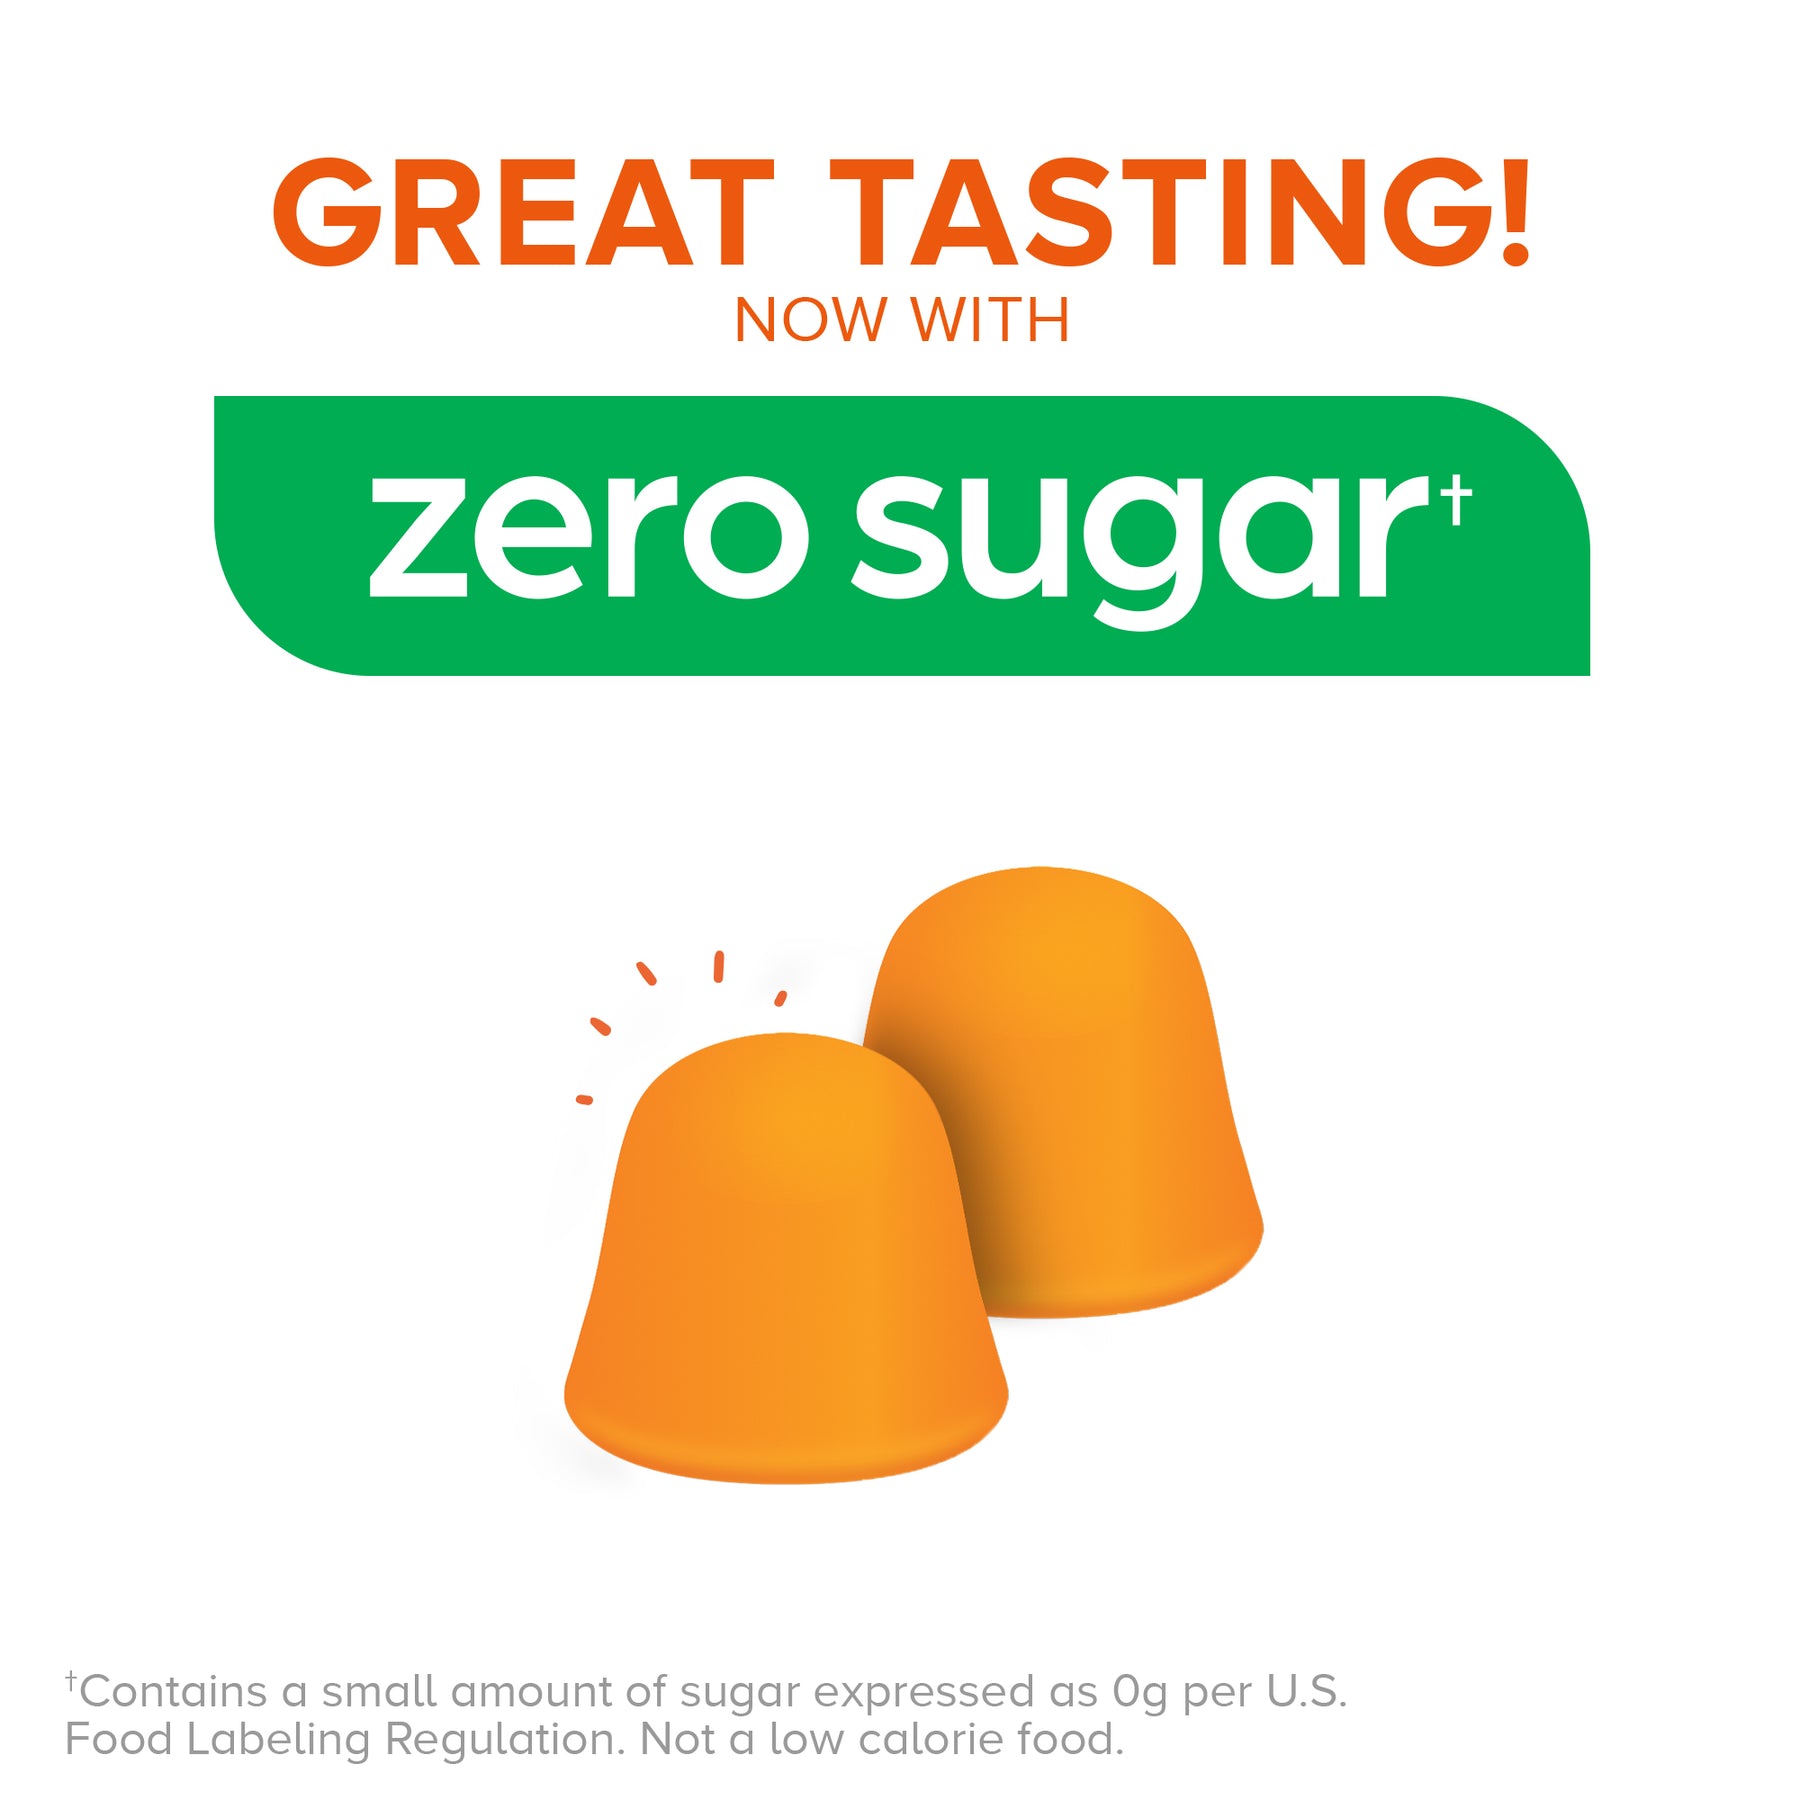 Turmeric Zero Sugar Gummies, 500mg